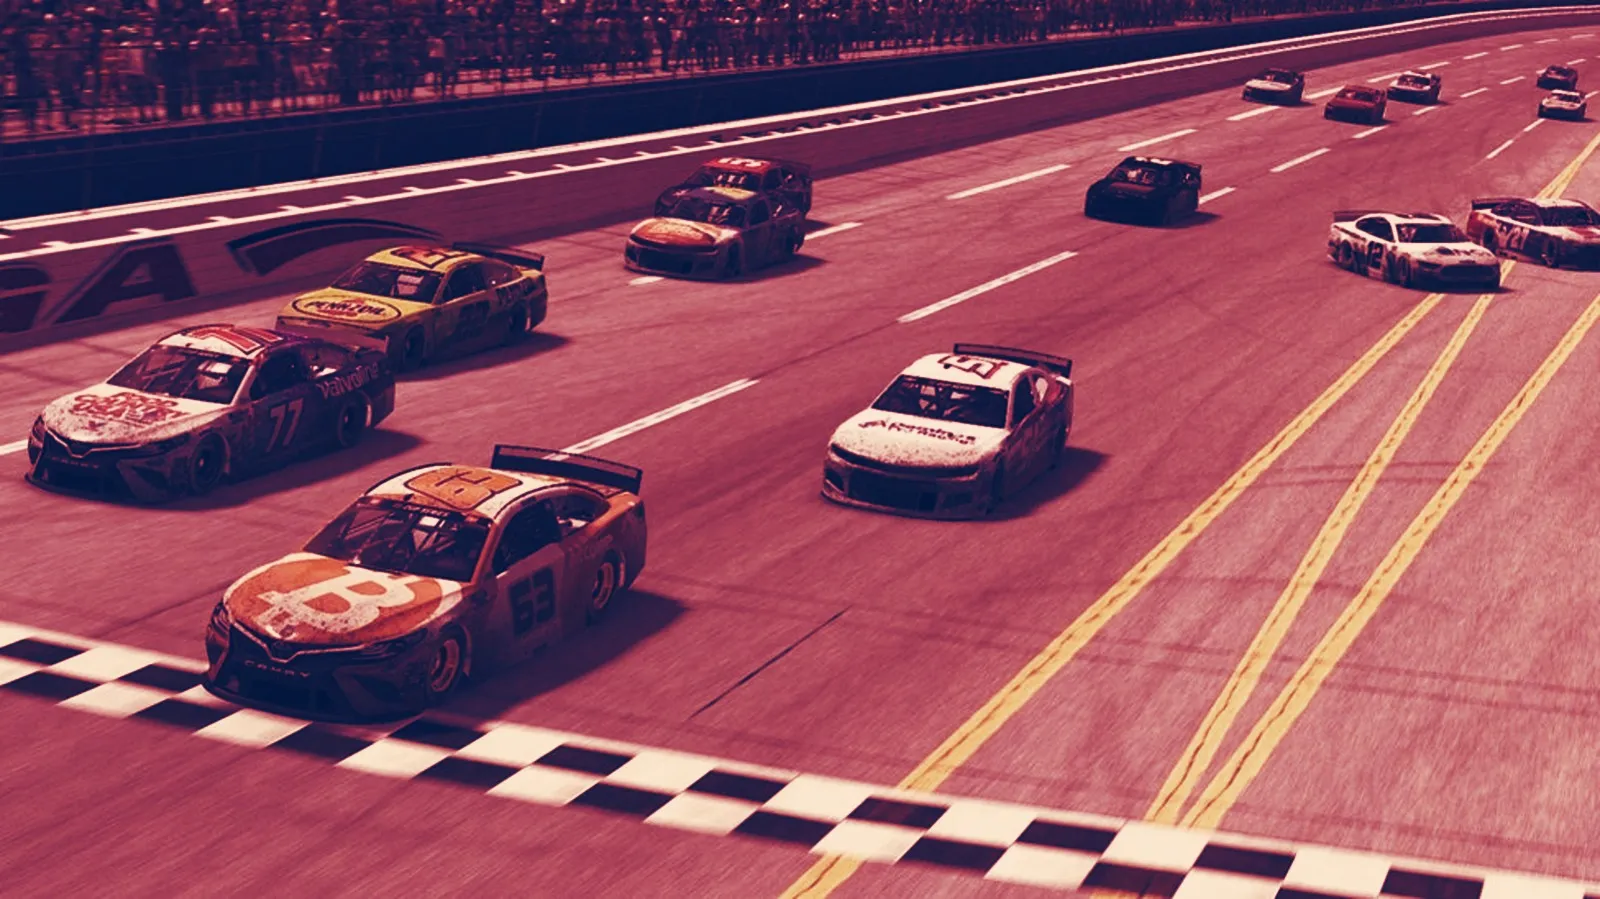 Bitcoin NASCAR racer beats NASCAR champion in virtual race. Image: Bryan Cook